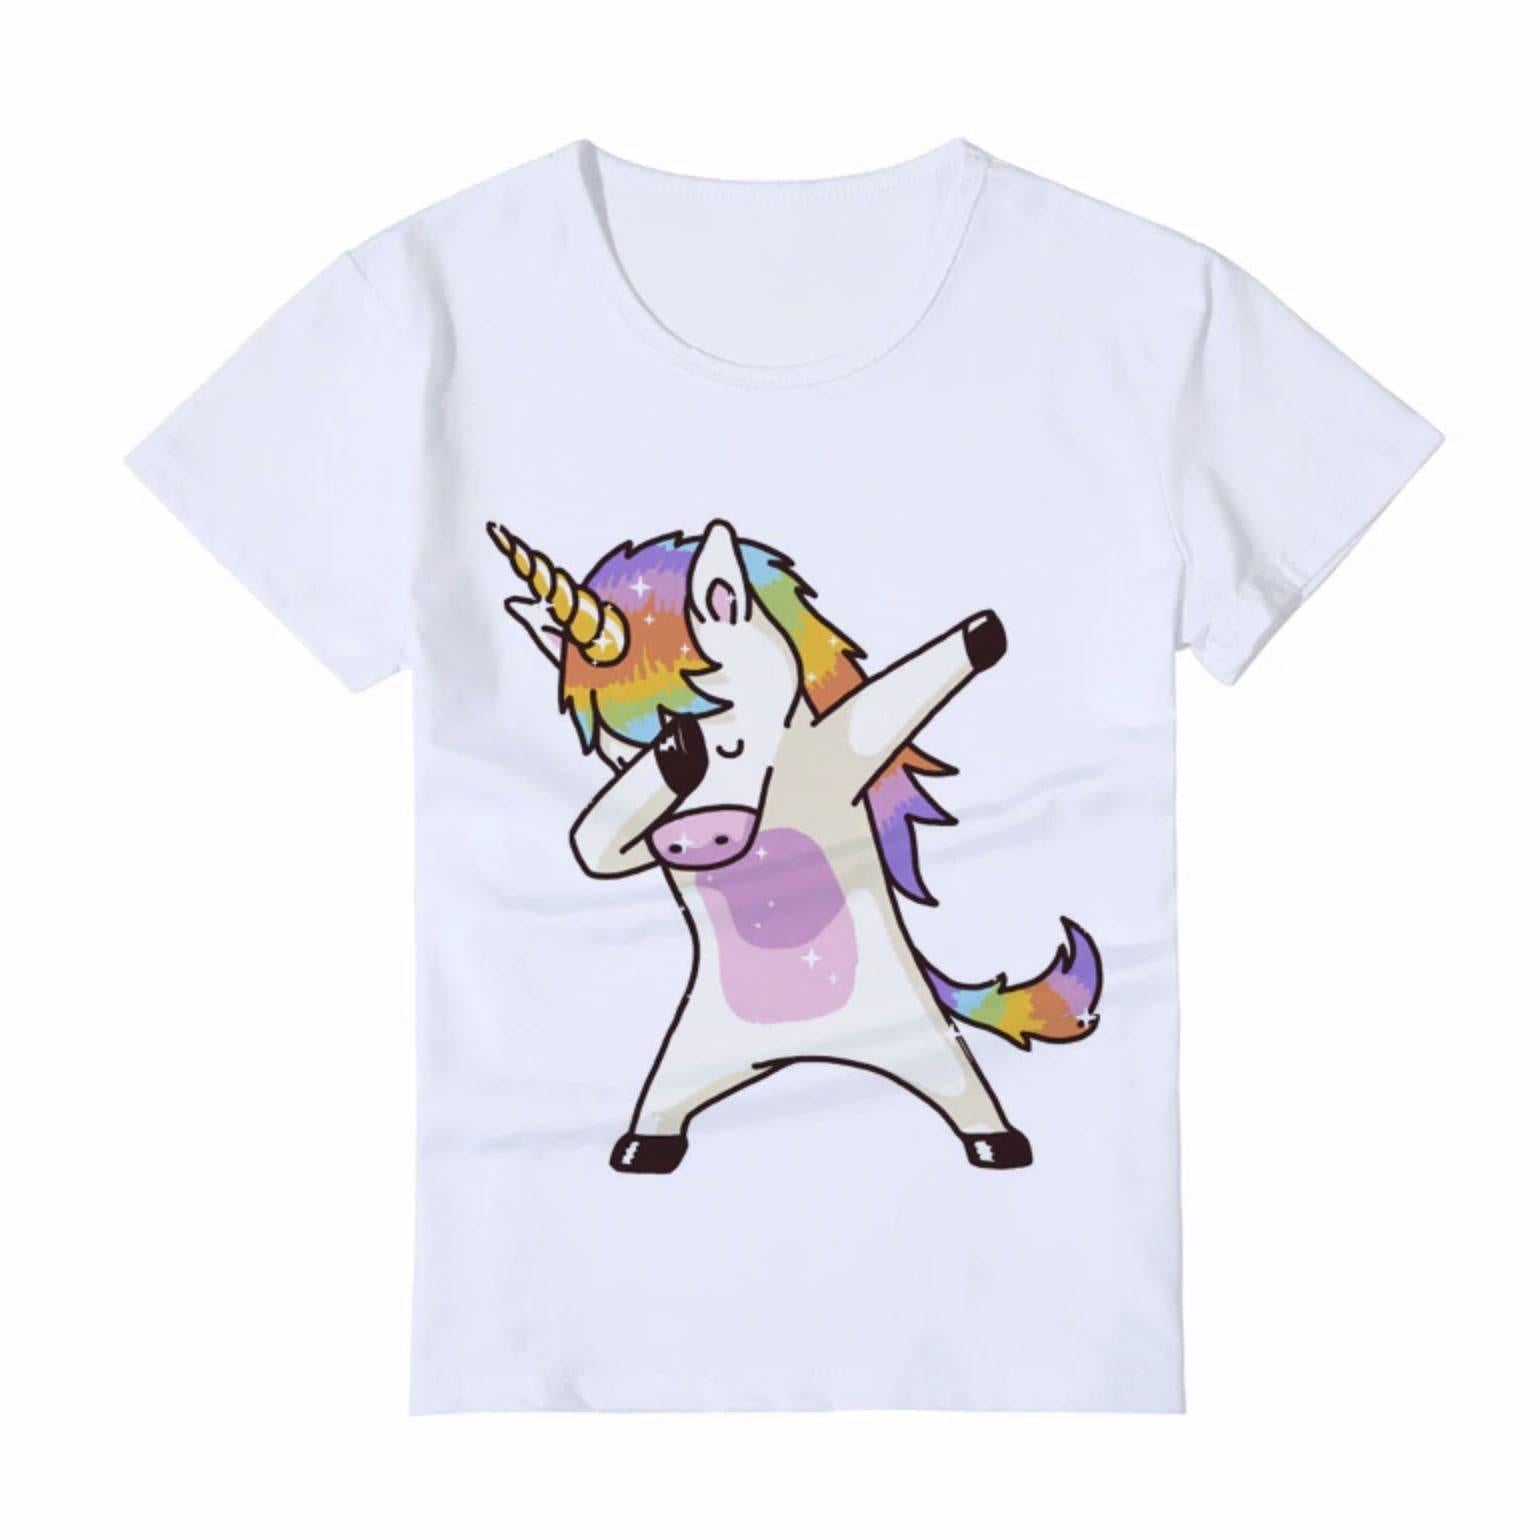 Camiseta Unicorn Who Dab Niño - Un unicornio